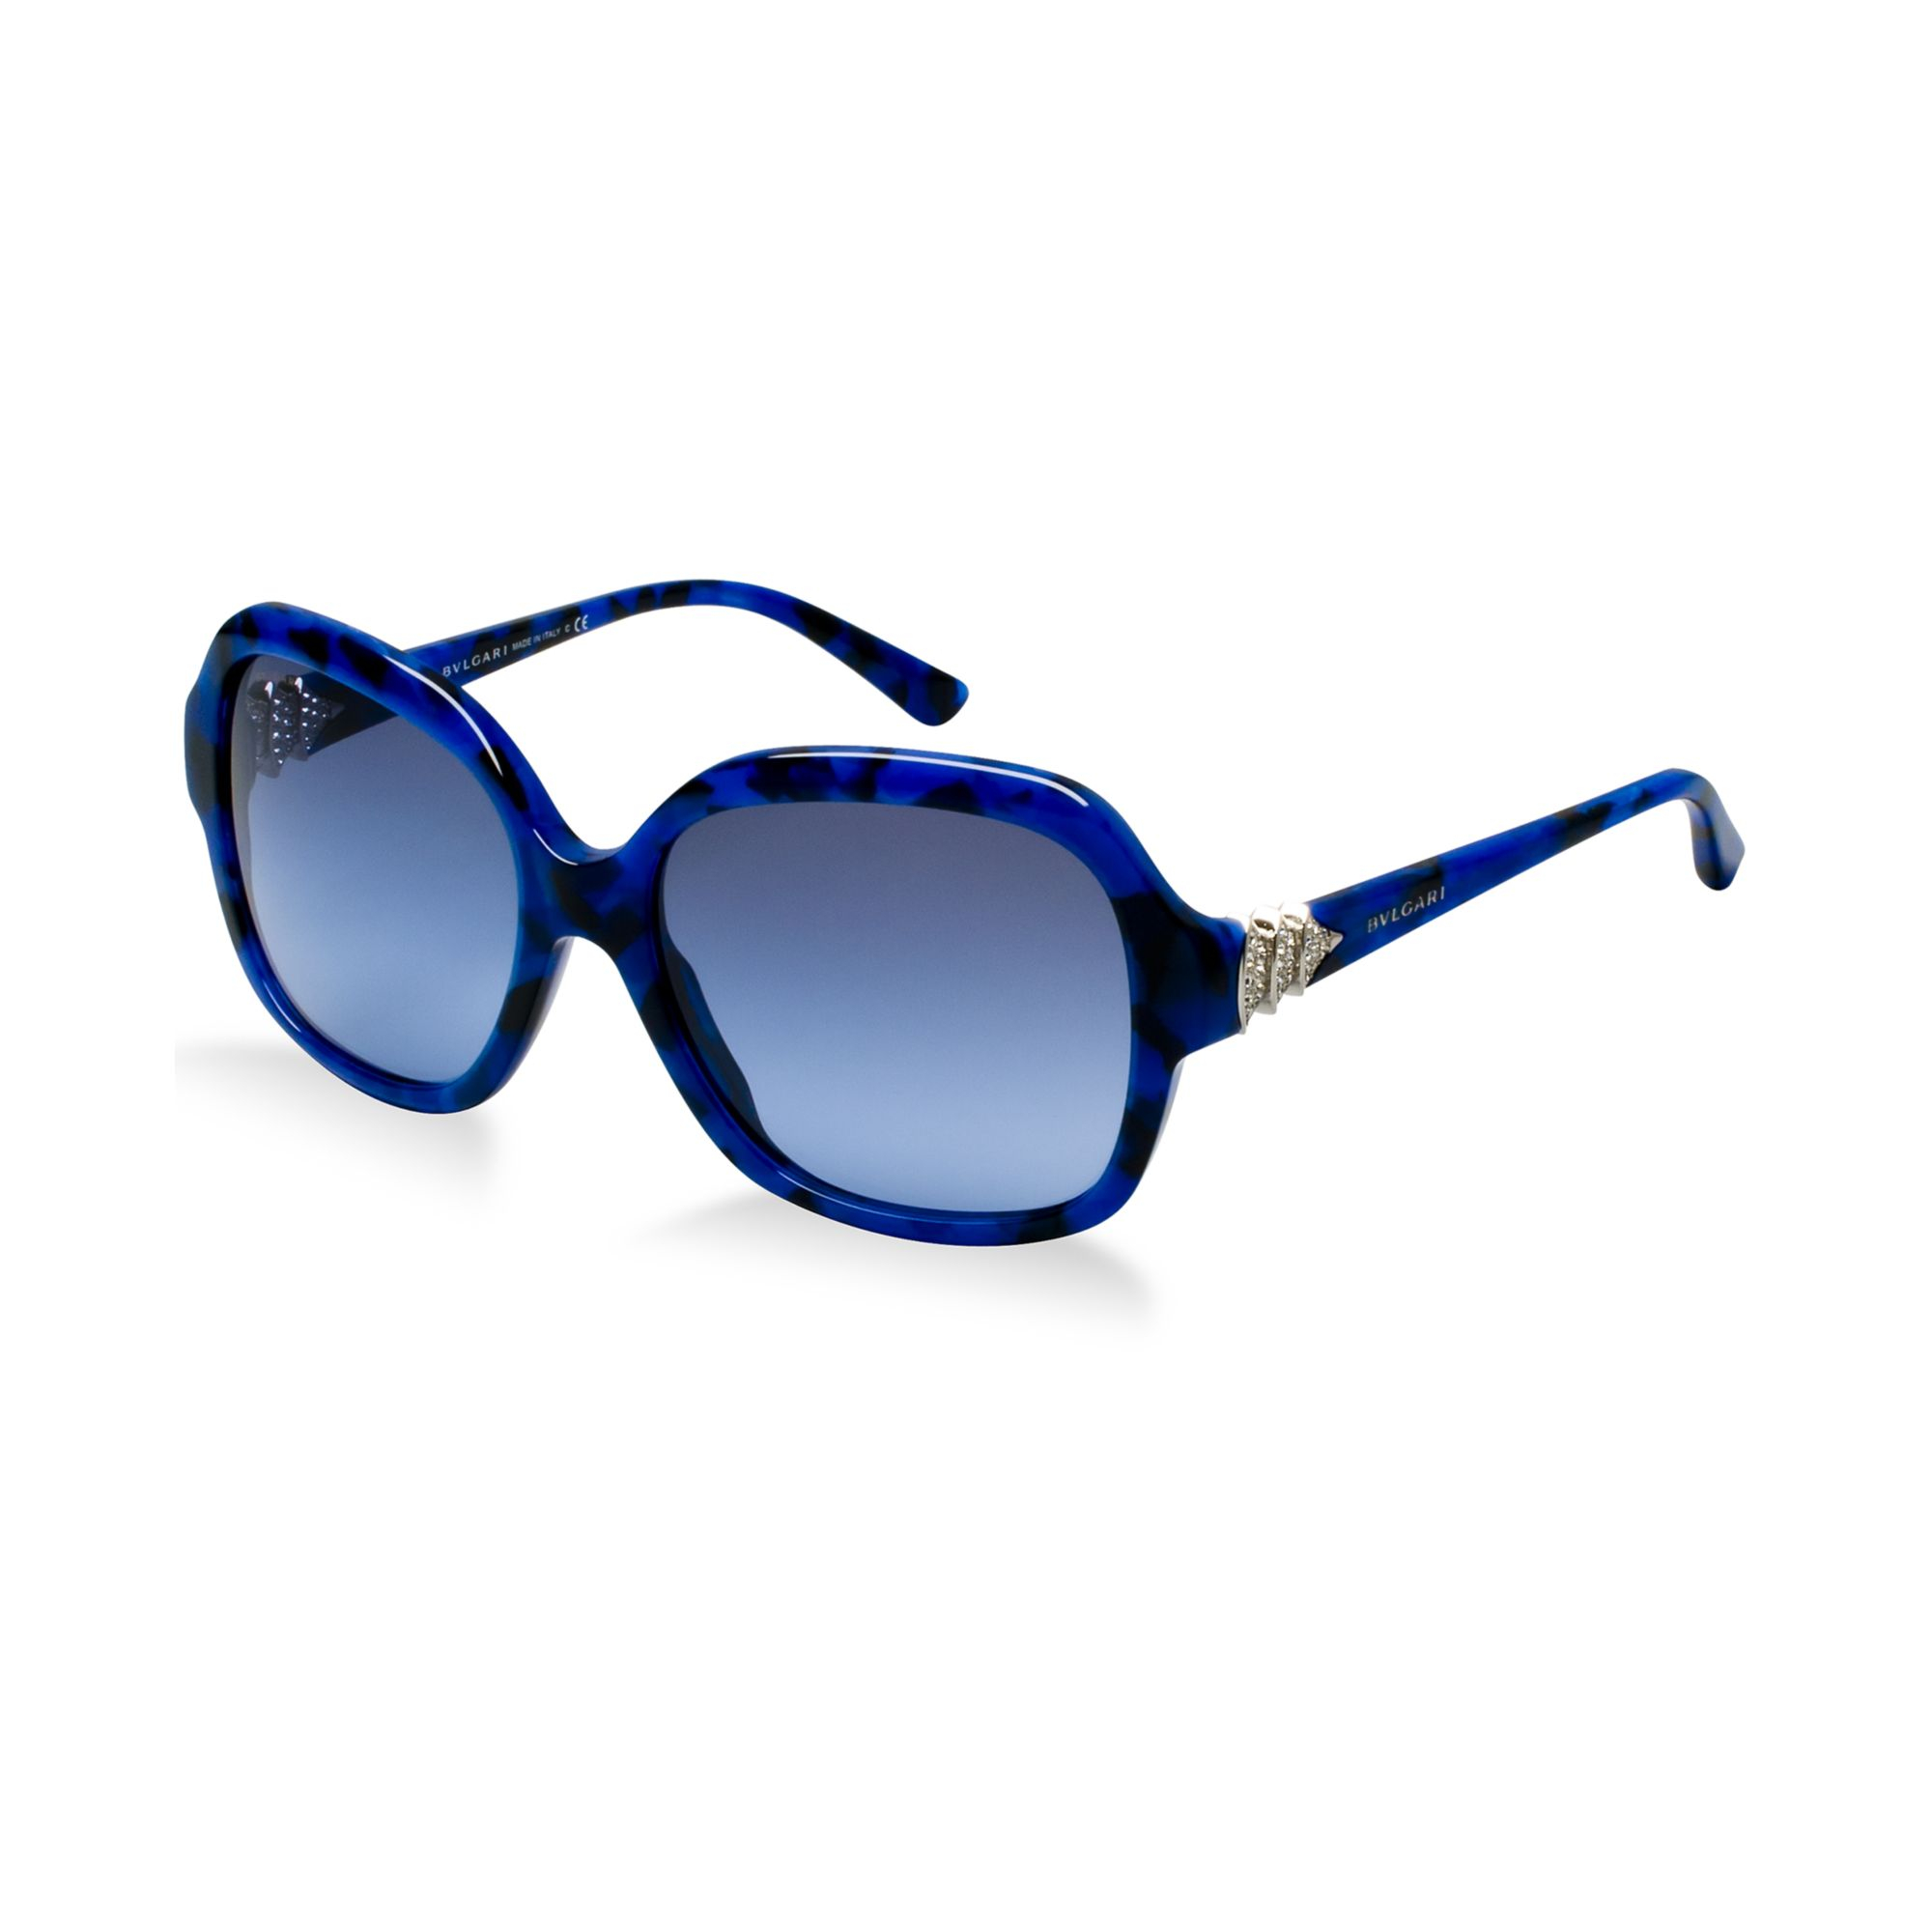 BVLGARI Sunglasses in Blue - Lyst